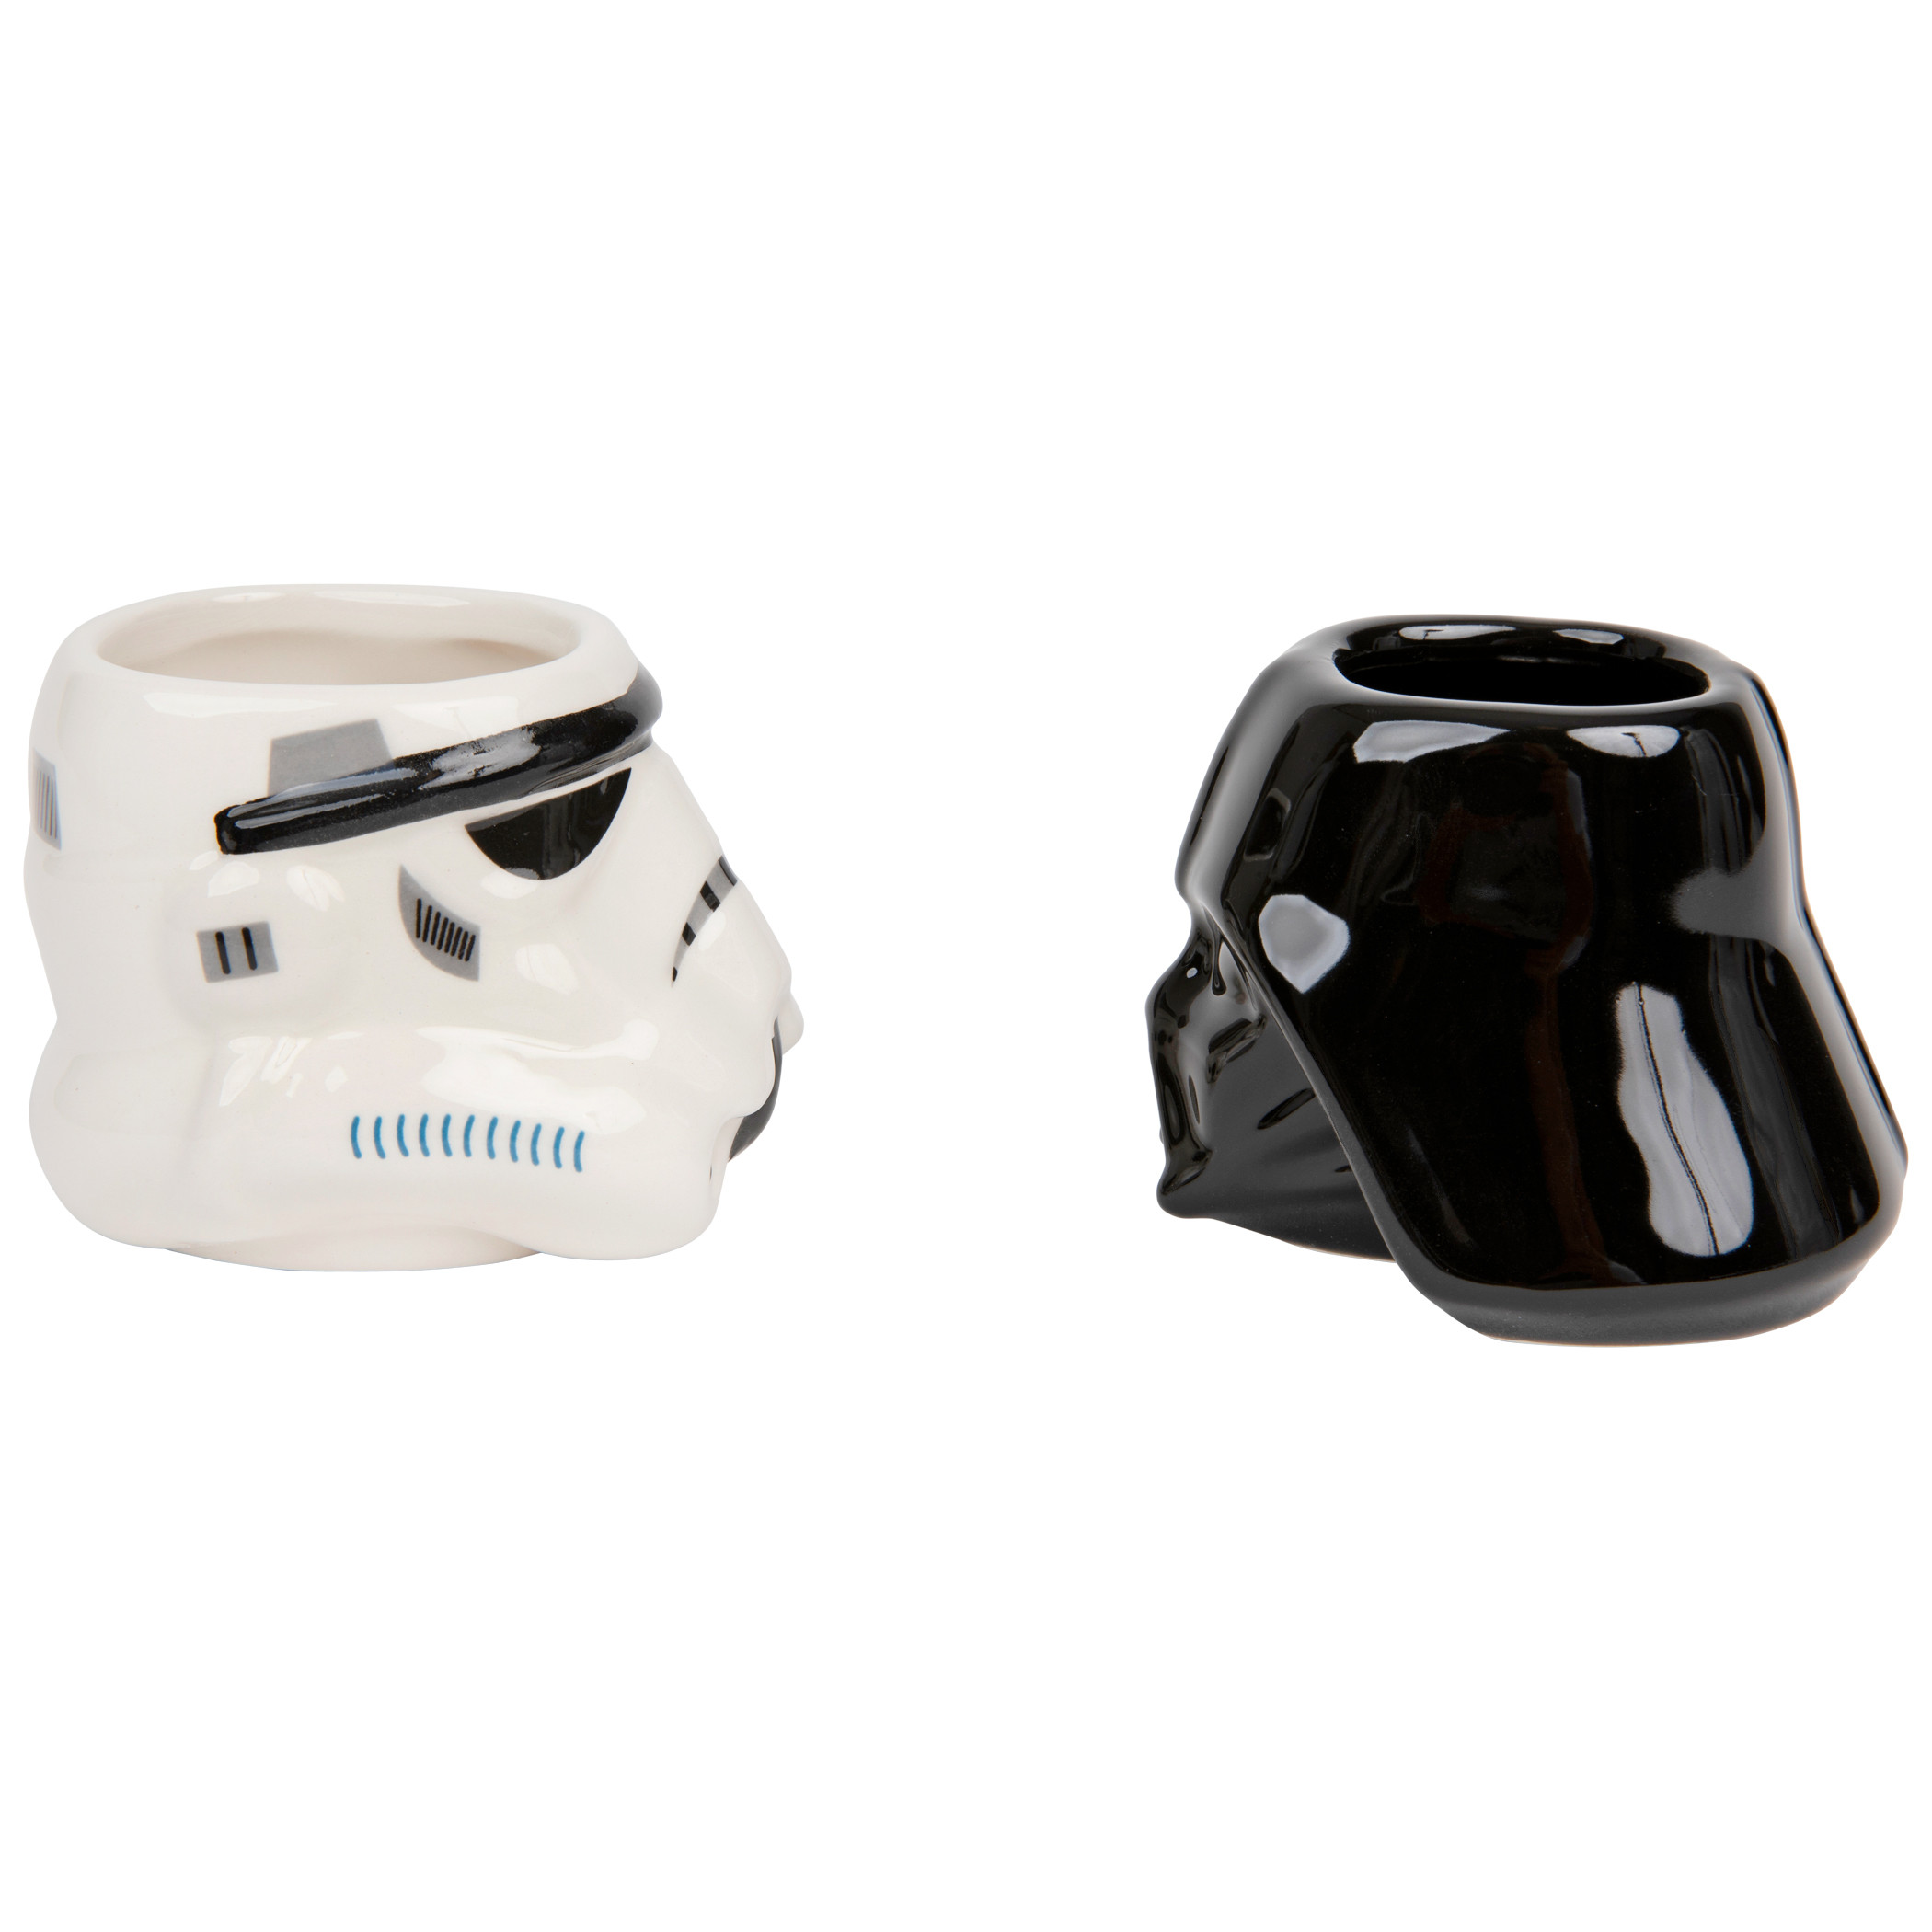 Star Wars Darth Vader and Stormtrooper Helmets 2-Pack Ceramic Mugs